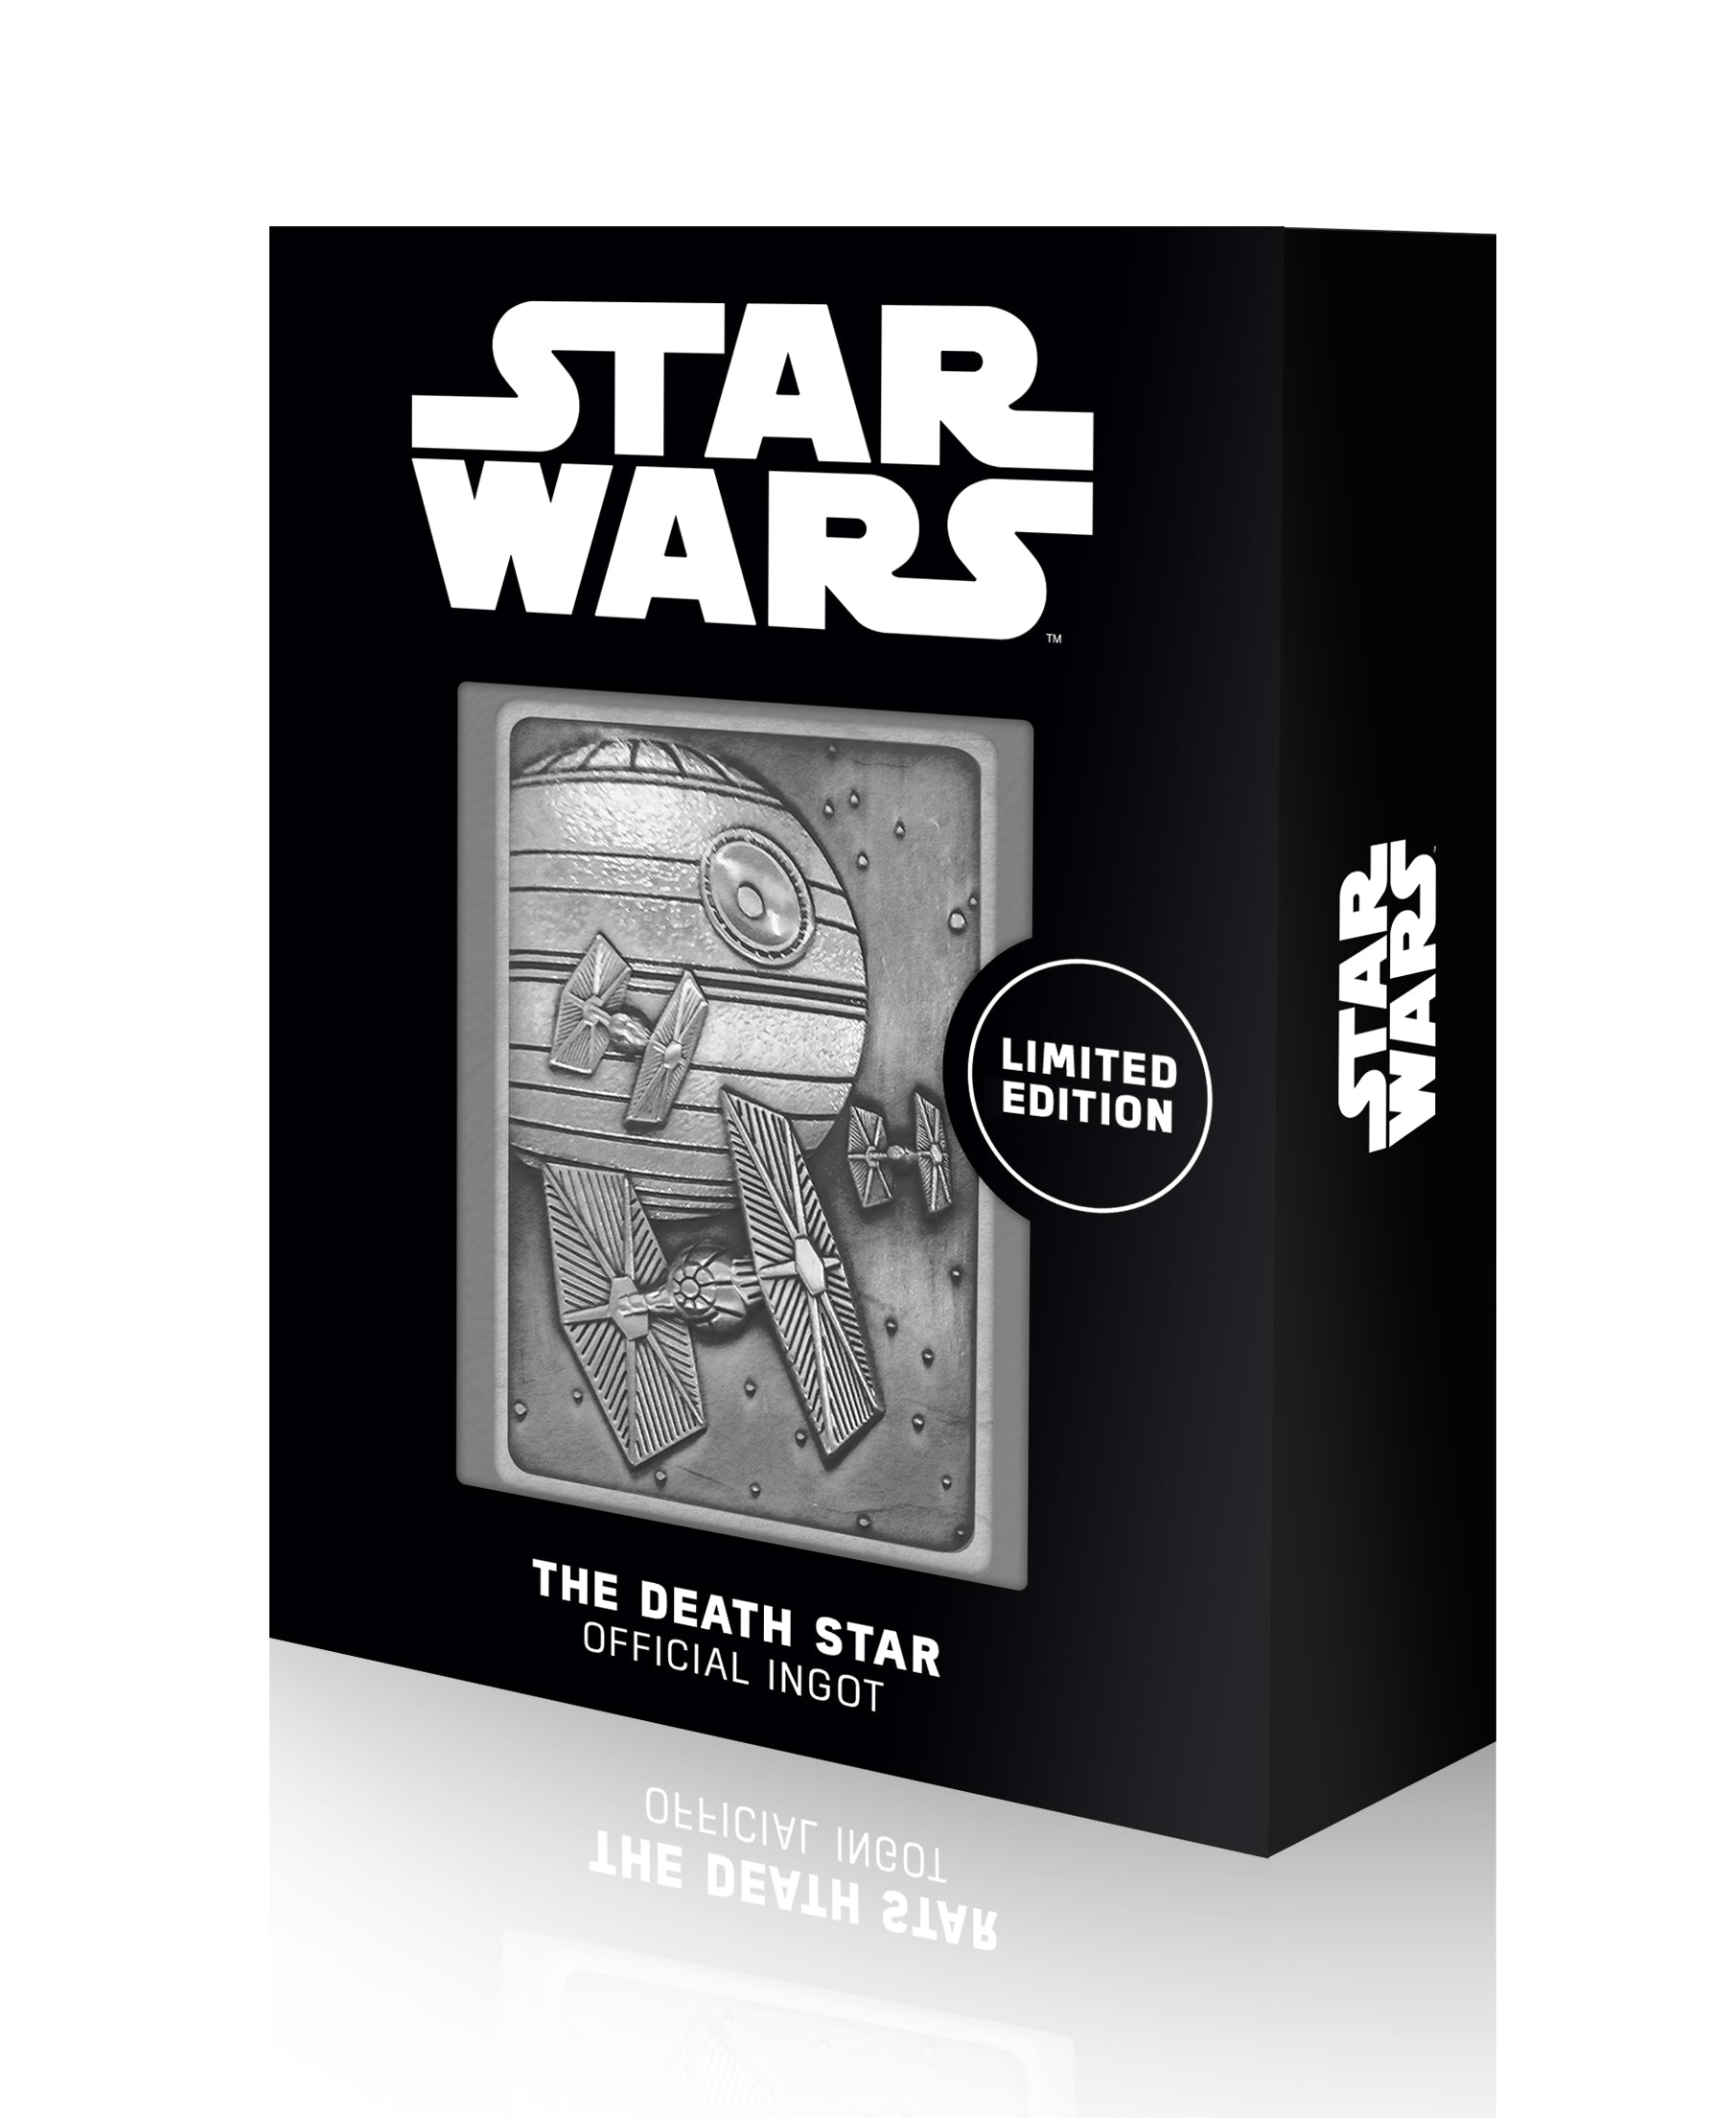 Star Wars Death Star Limited Edition Ingot